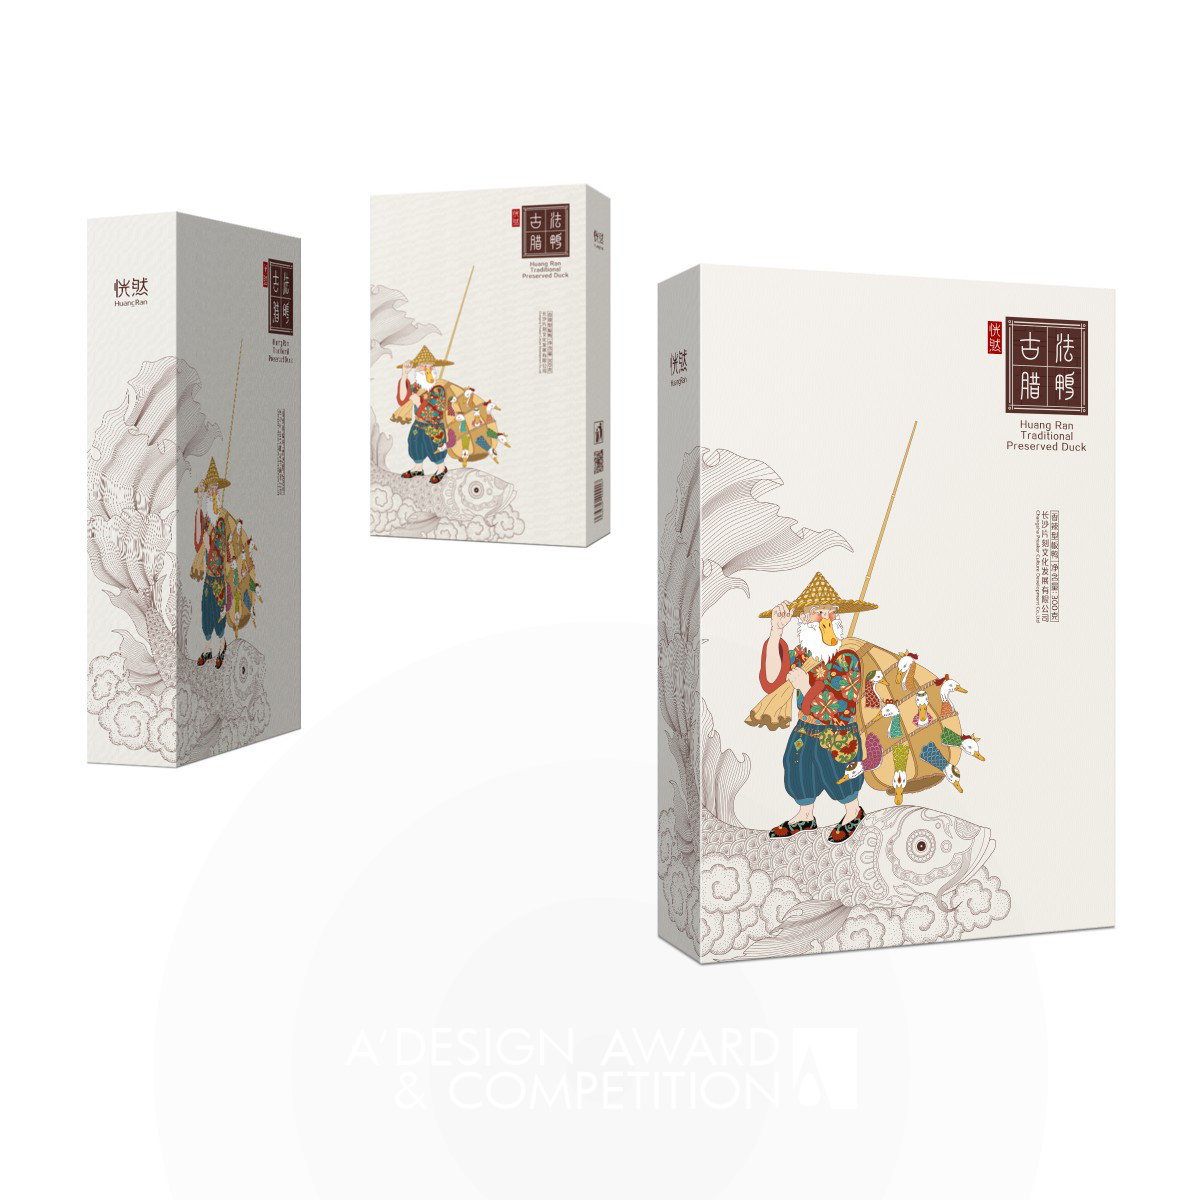 HuangRan Traditional Preserved Duck Packaging by Lynn Tsang